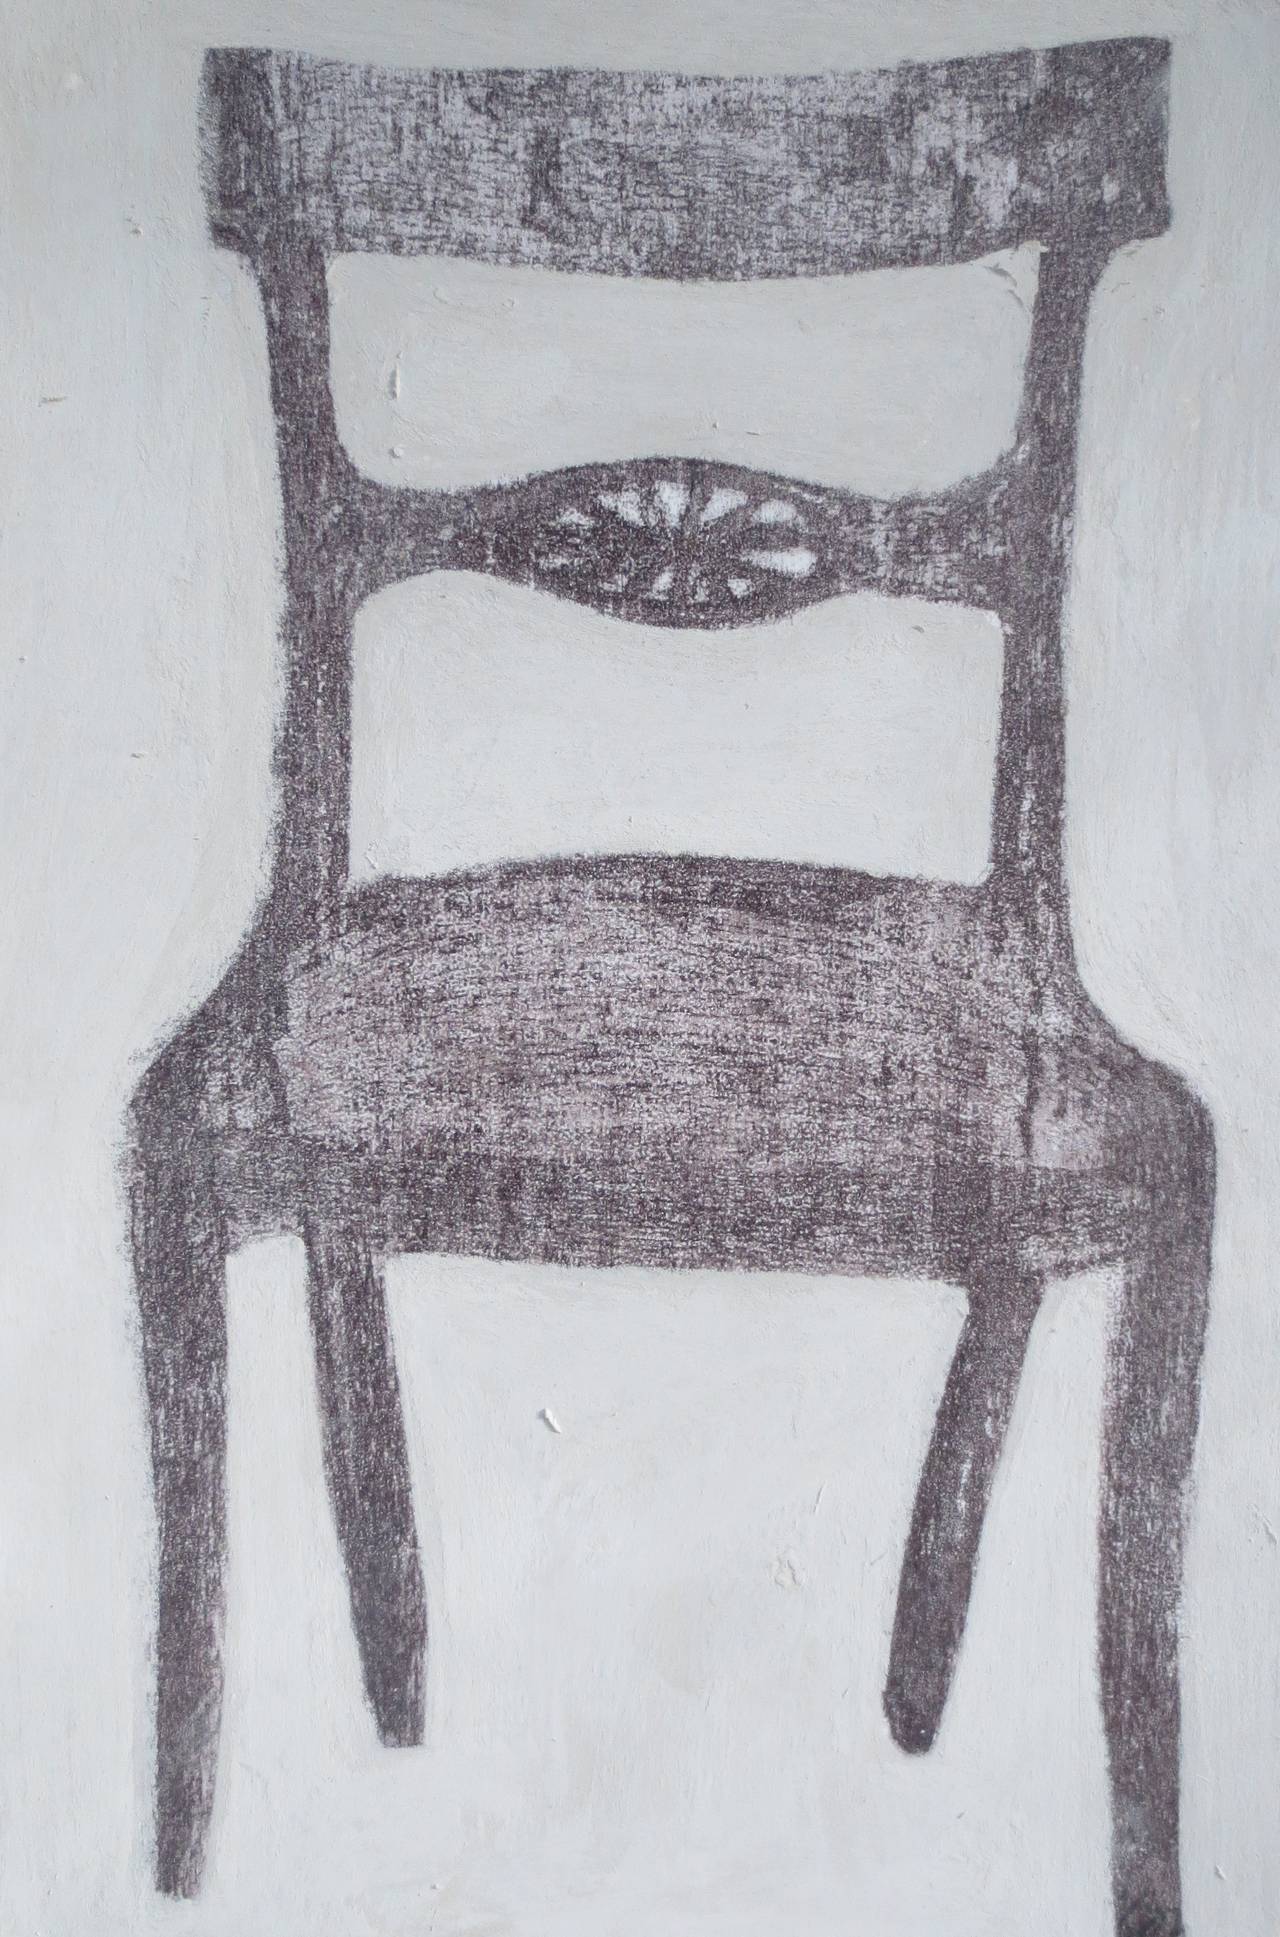 Pentreath's Chair